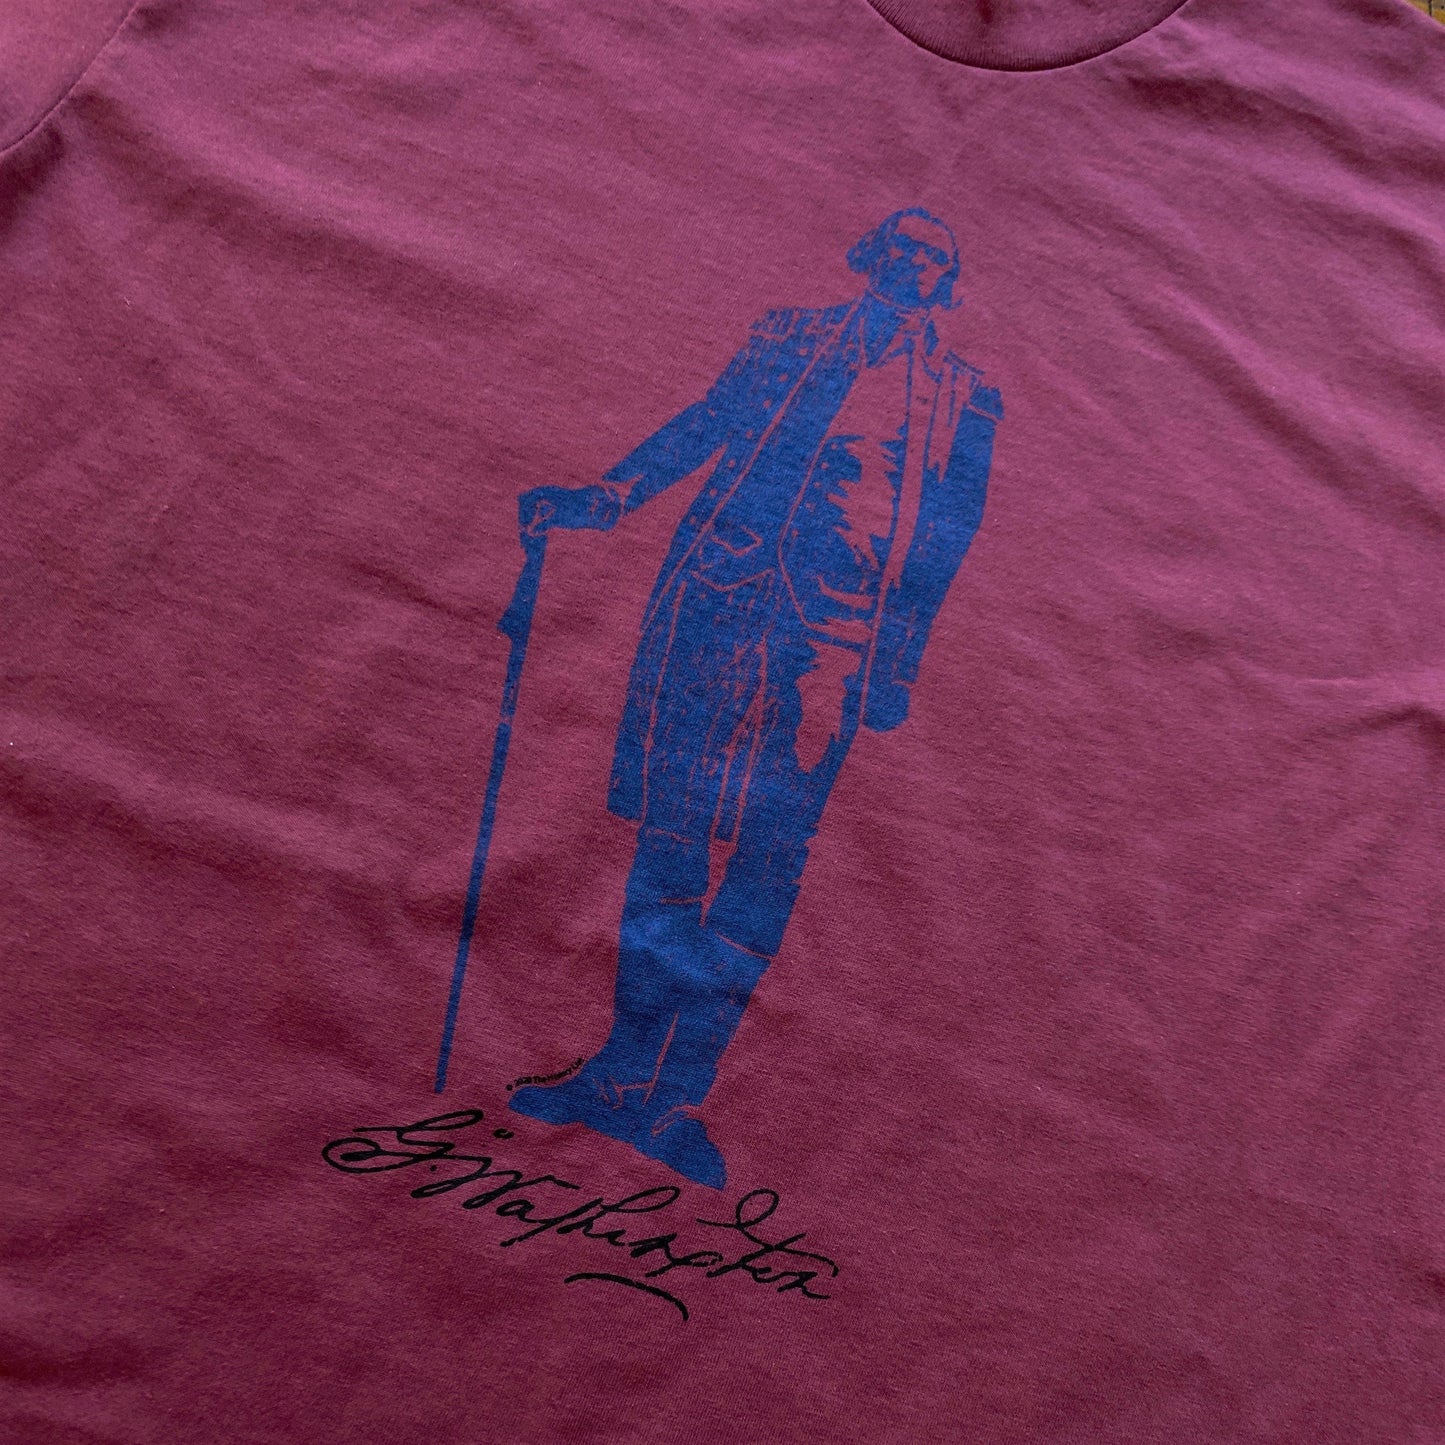 George Washington "Signature Series" Shirt